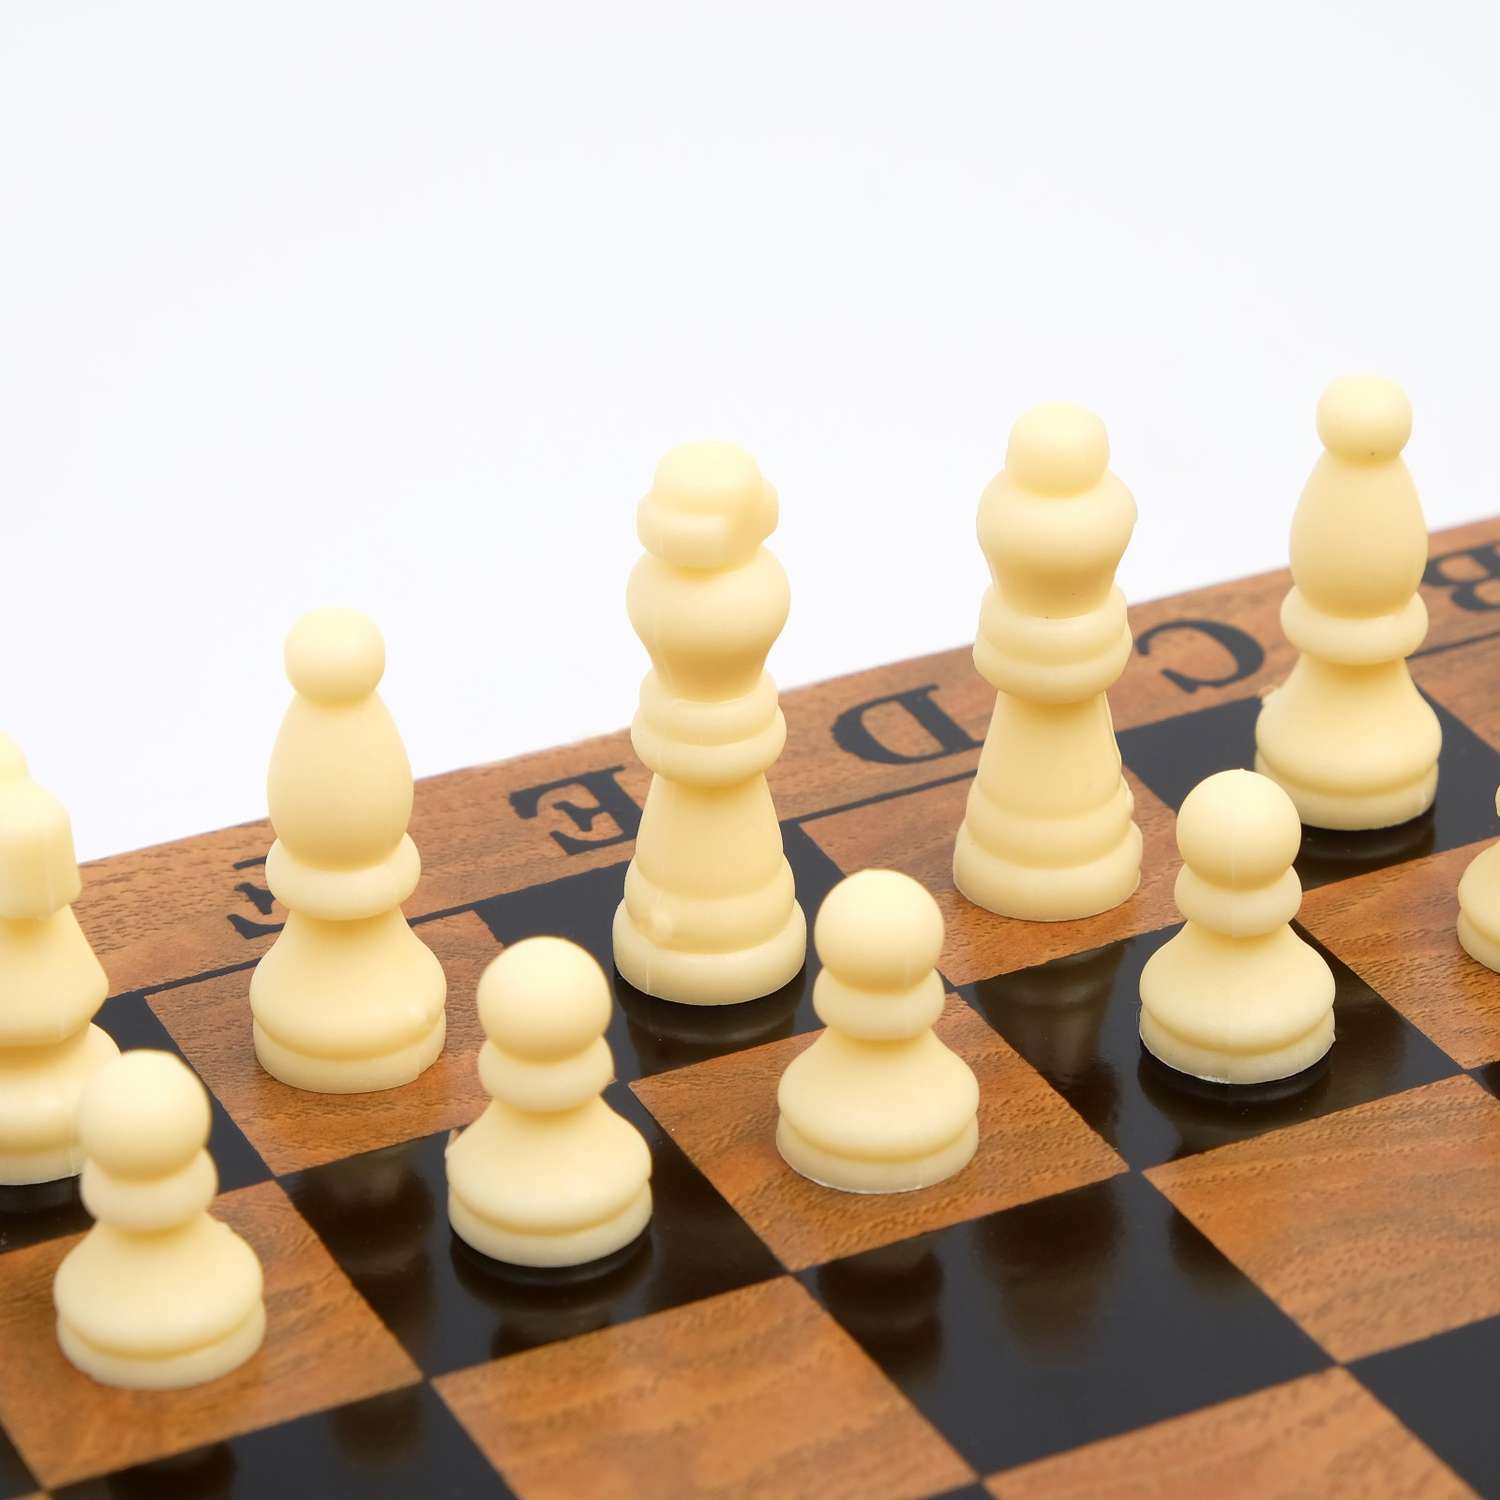 Настольная игра Sima-Land 3 в 1 «Цейтнот» шахматы шашки нарды 24х24 см - фото 2